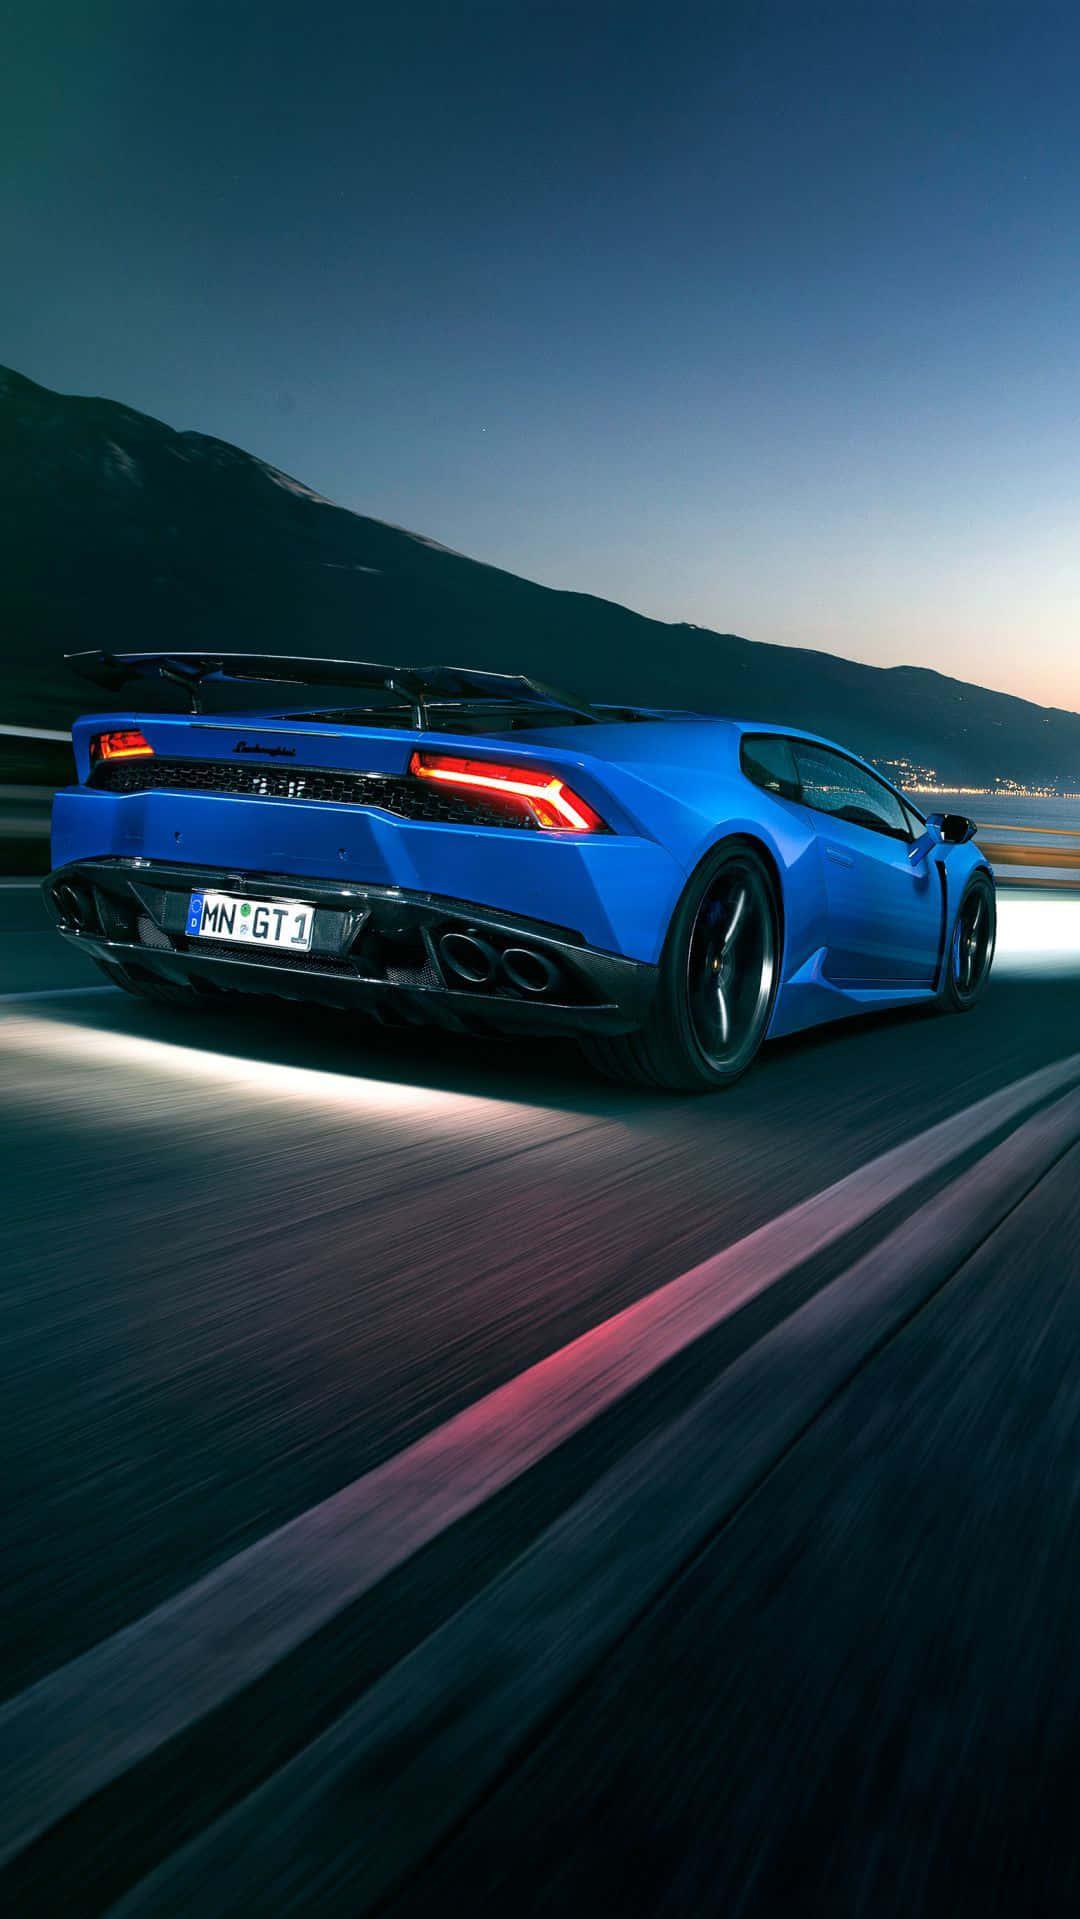 The Blue Lamborghini Huracan Is Driving Down Road At